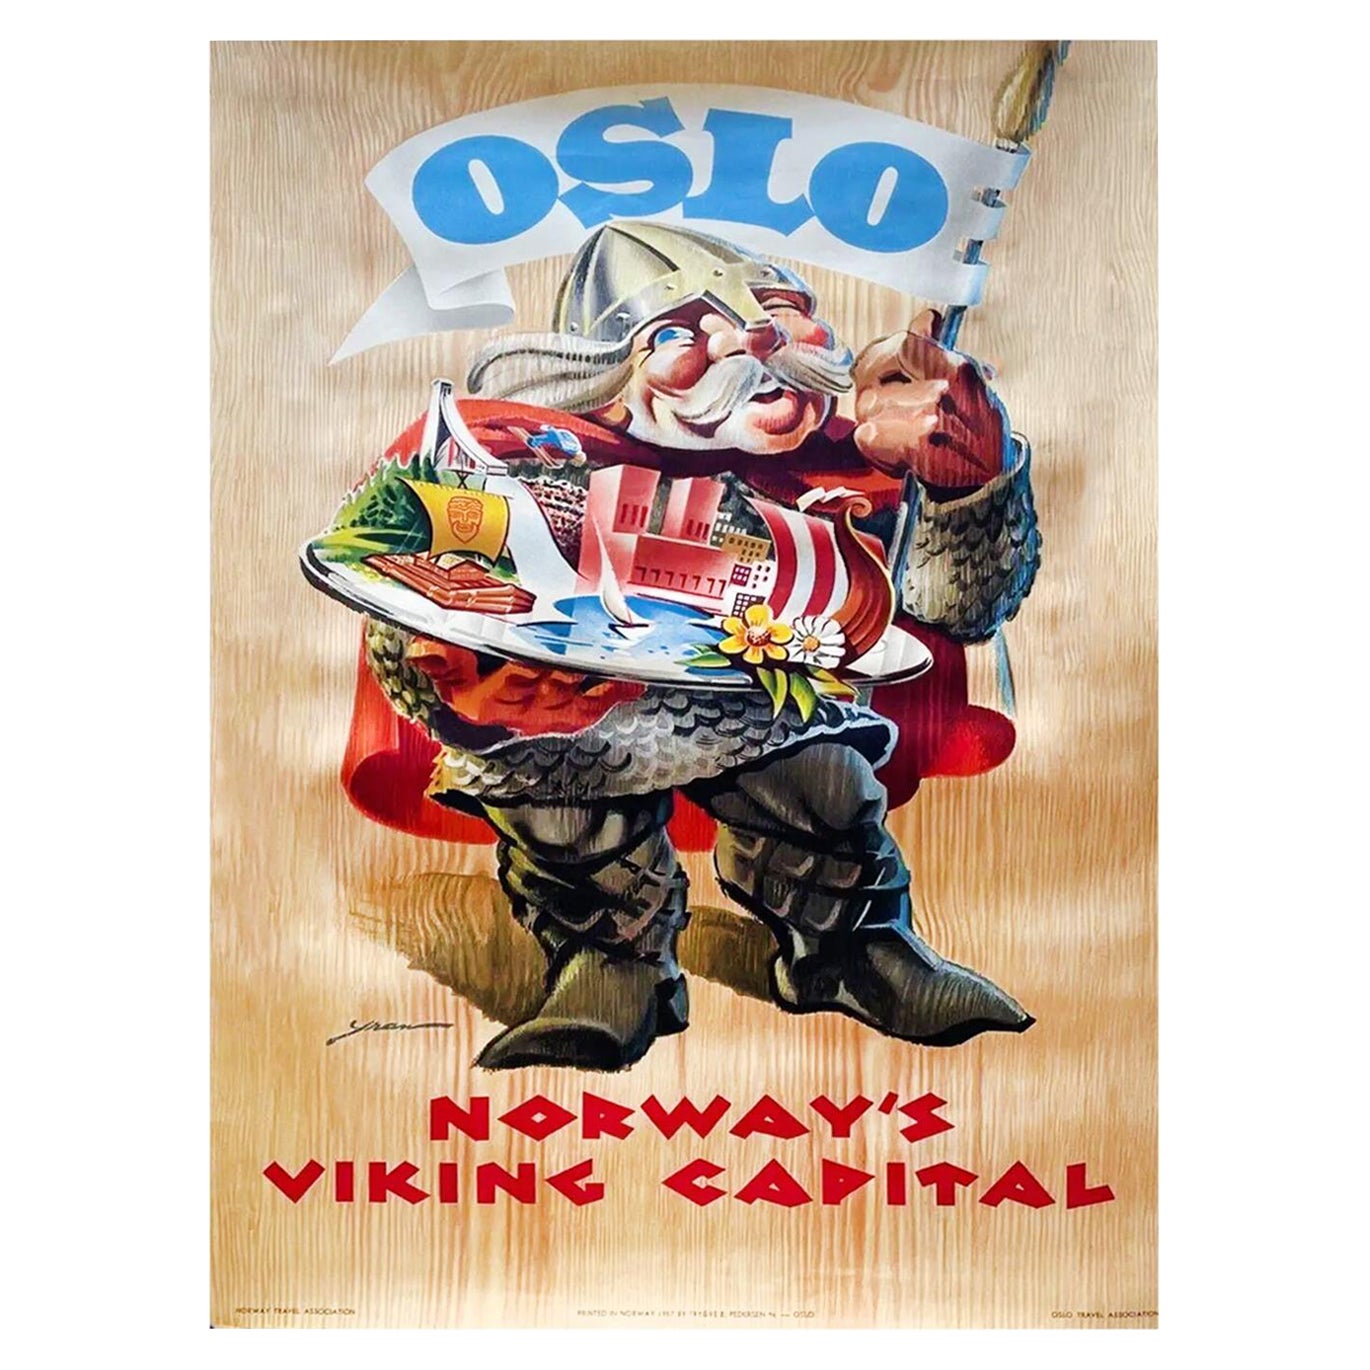 1957 Oslo - Norway's Viking Capital Original Vintage Poster